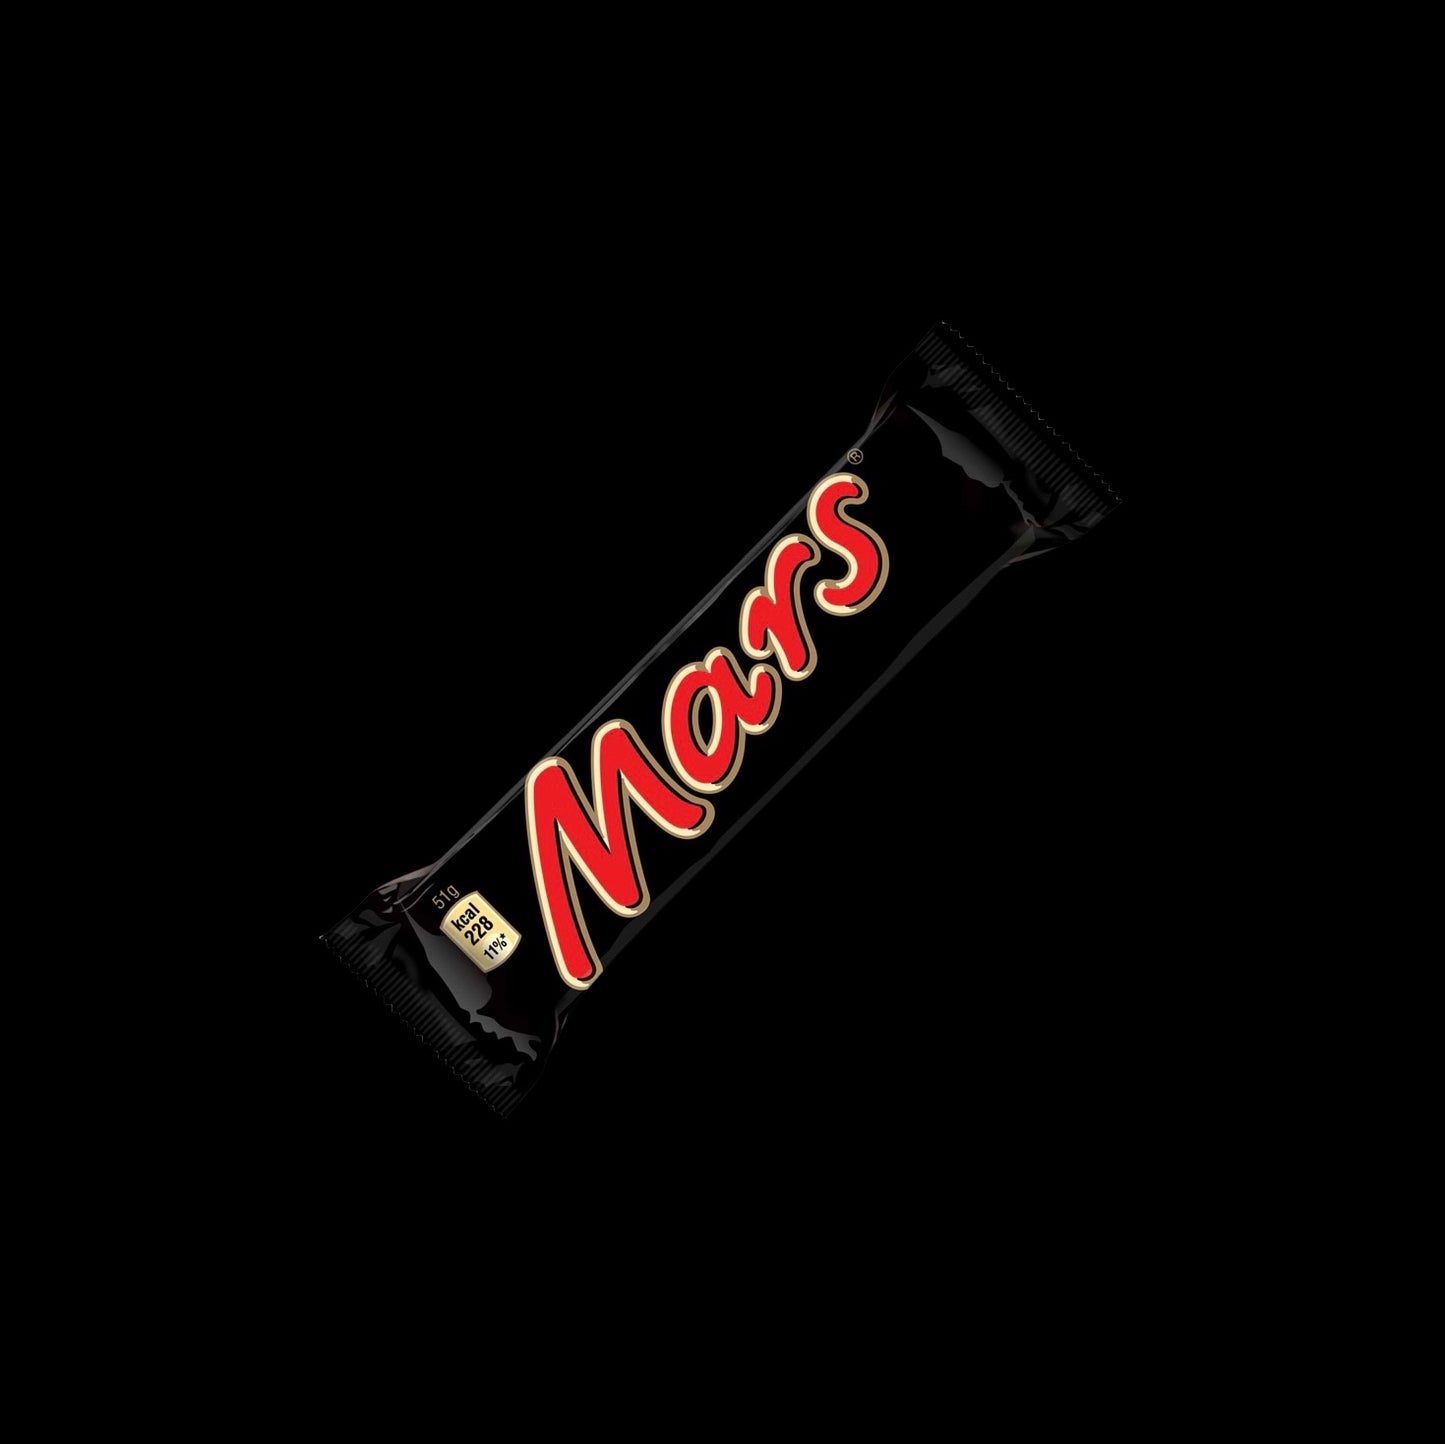 Mars Riegel 51g